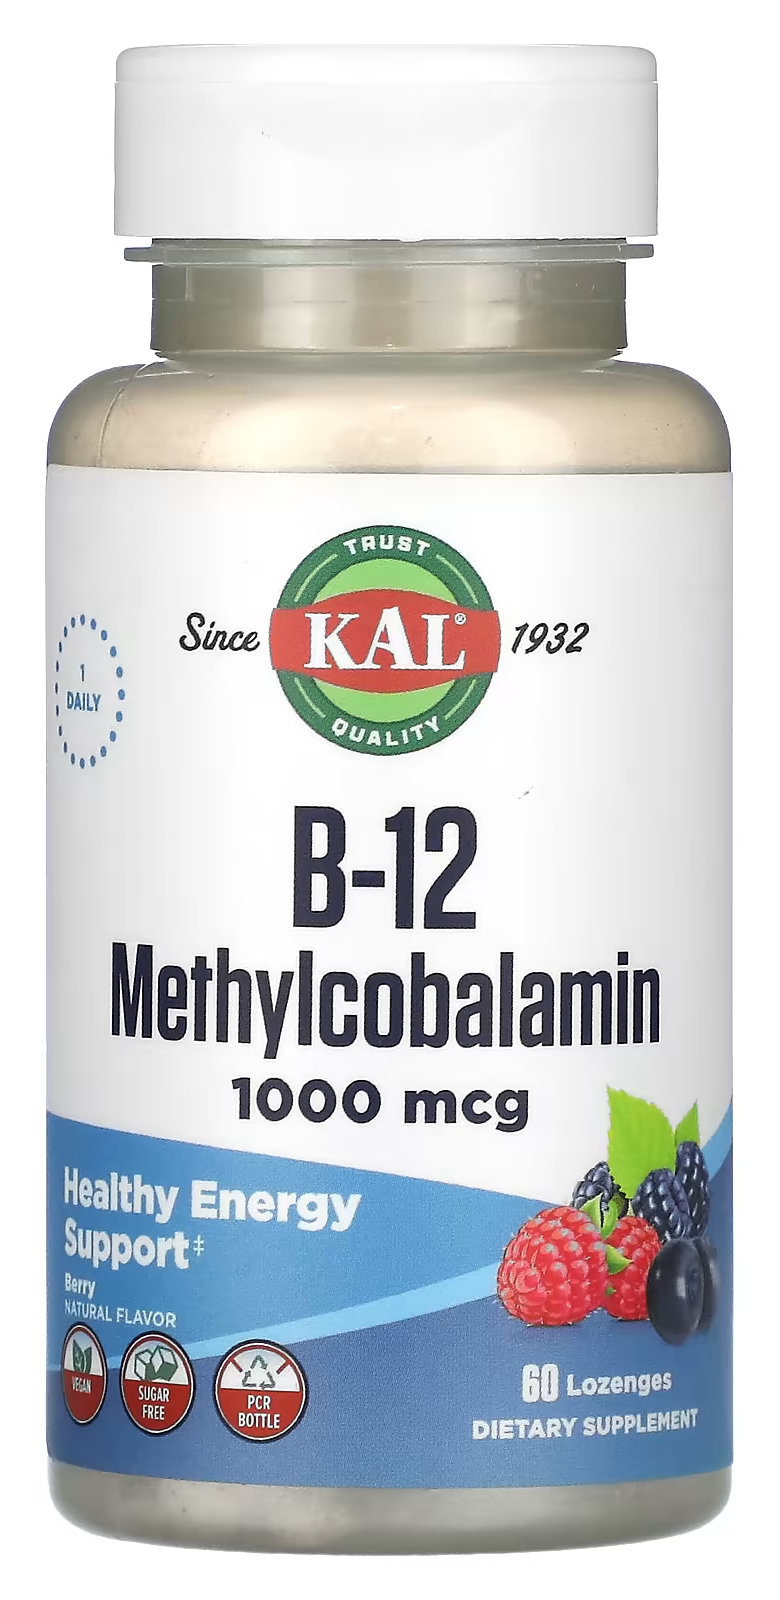 Метилкобаламин 1000 мкг. Methylcobalamin b12 1000 мкг. Метилкобаламин 1000 мкг 180 штук. Метилкобаламин 5 MG source natural. Метилкобаламин 1000 мкг купить.